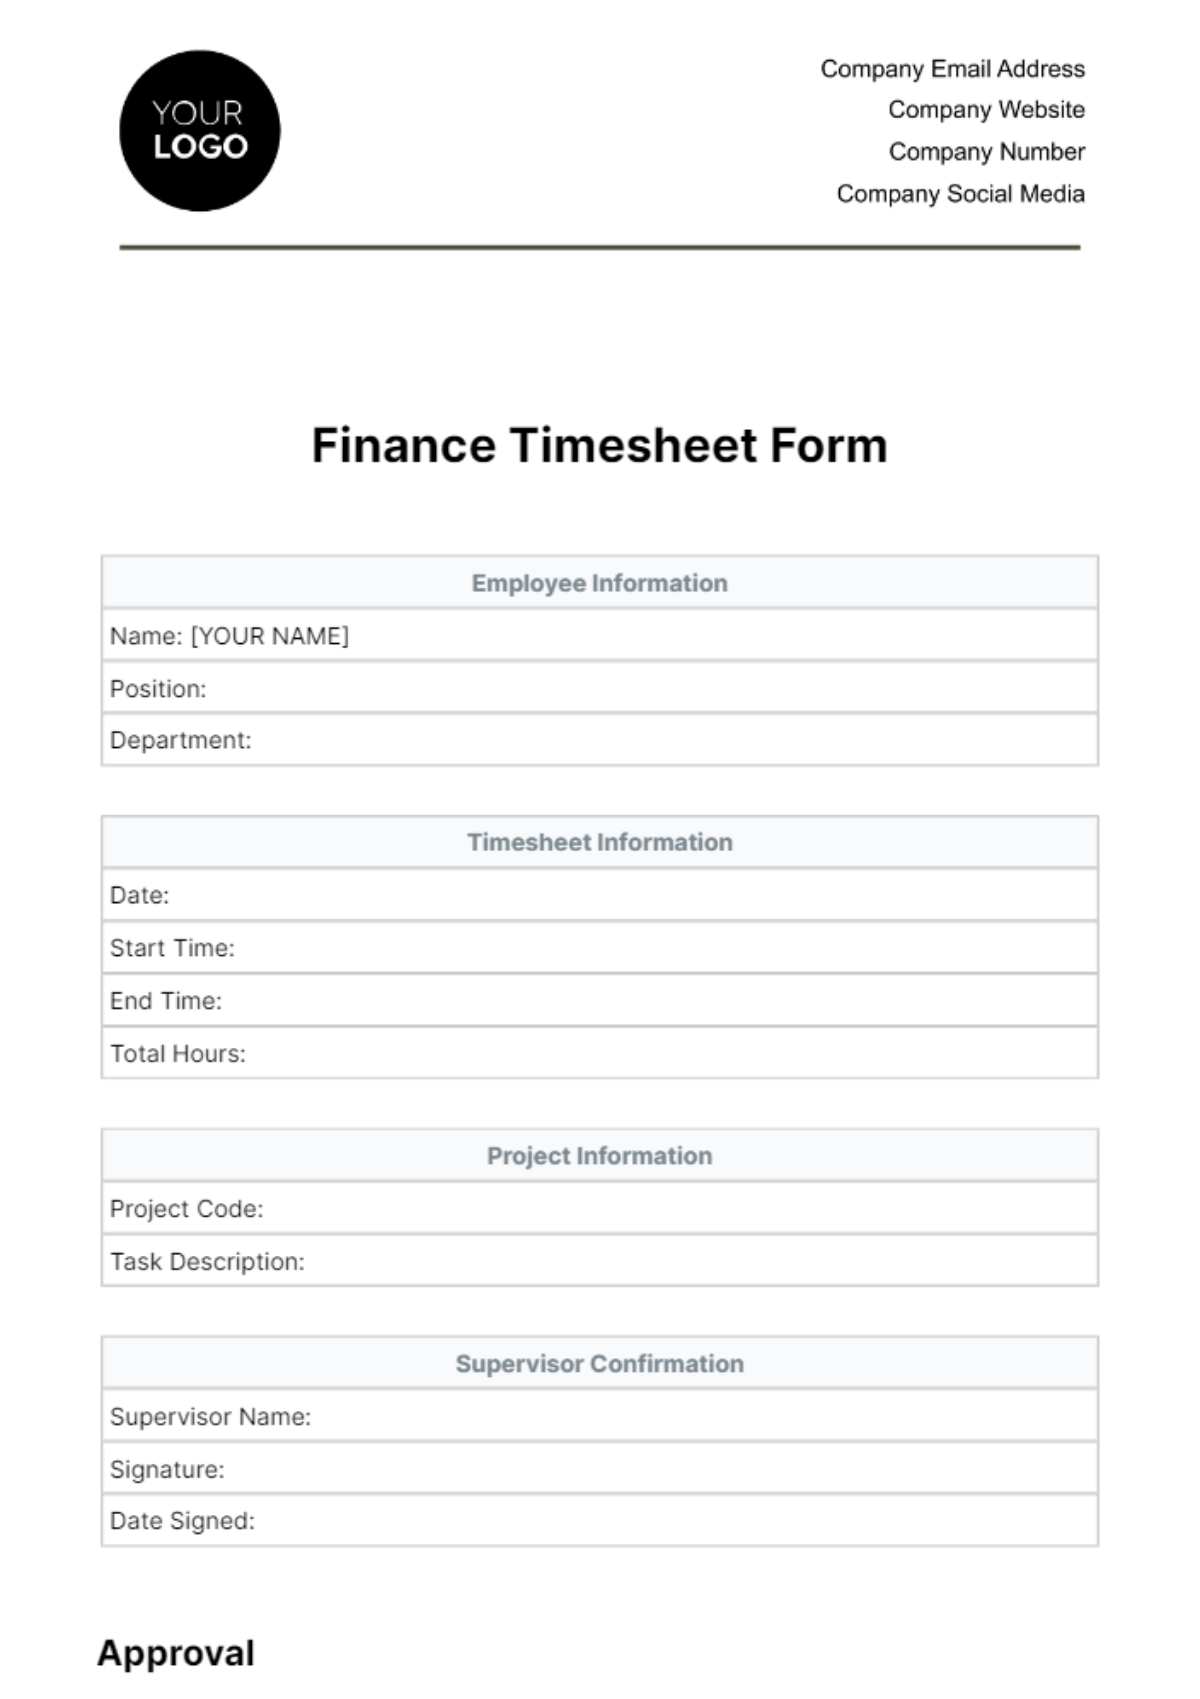 Free Finance Timesheet Form Template